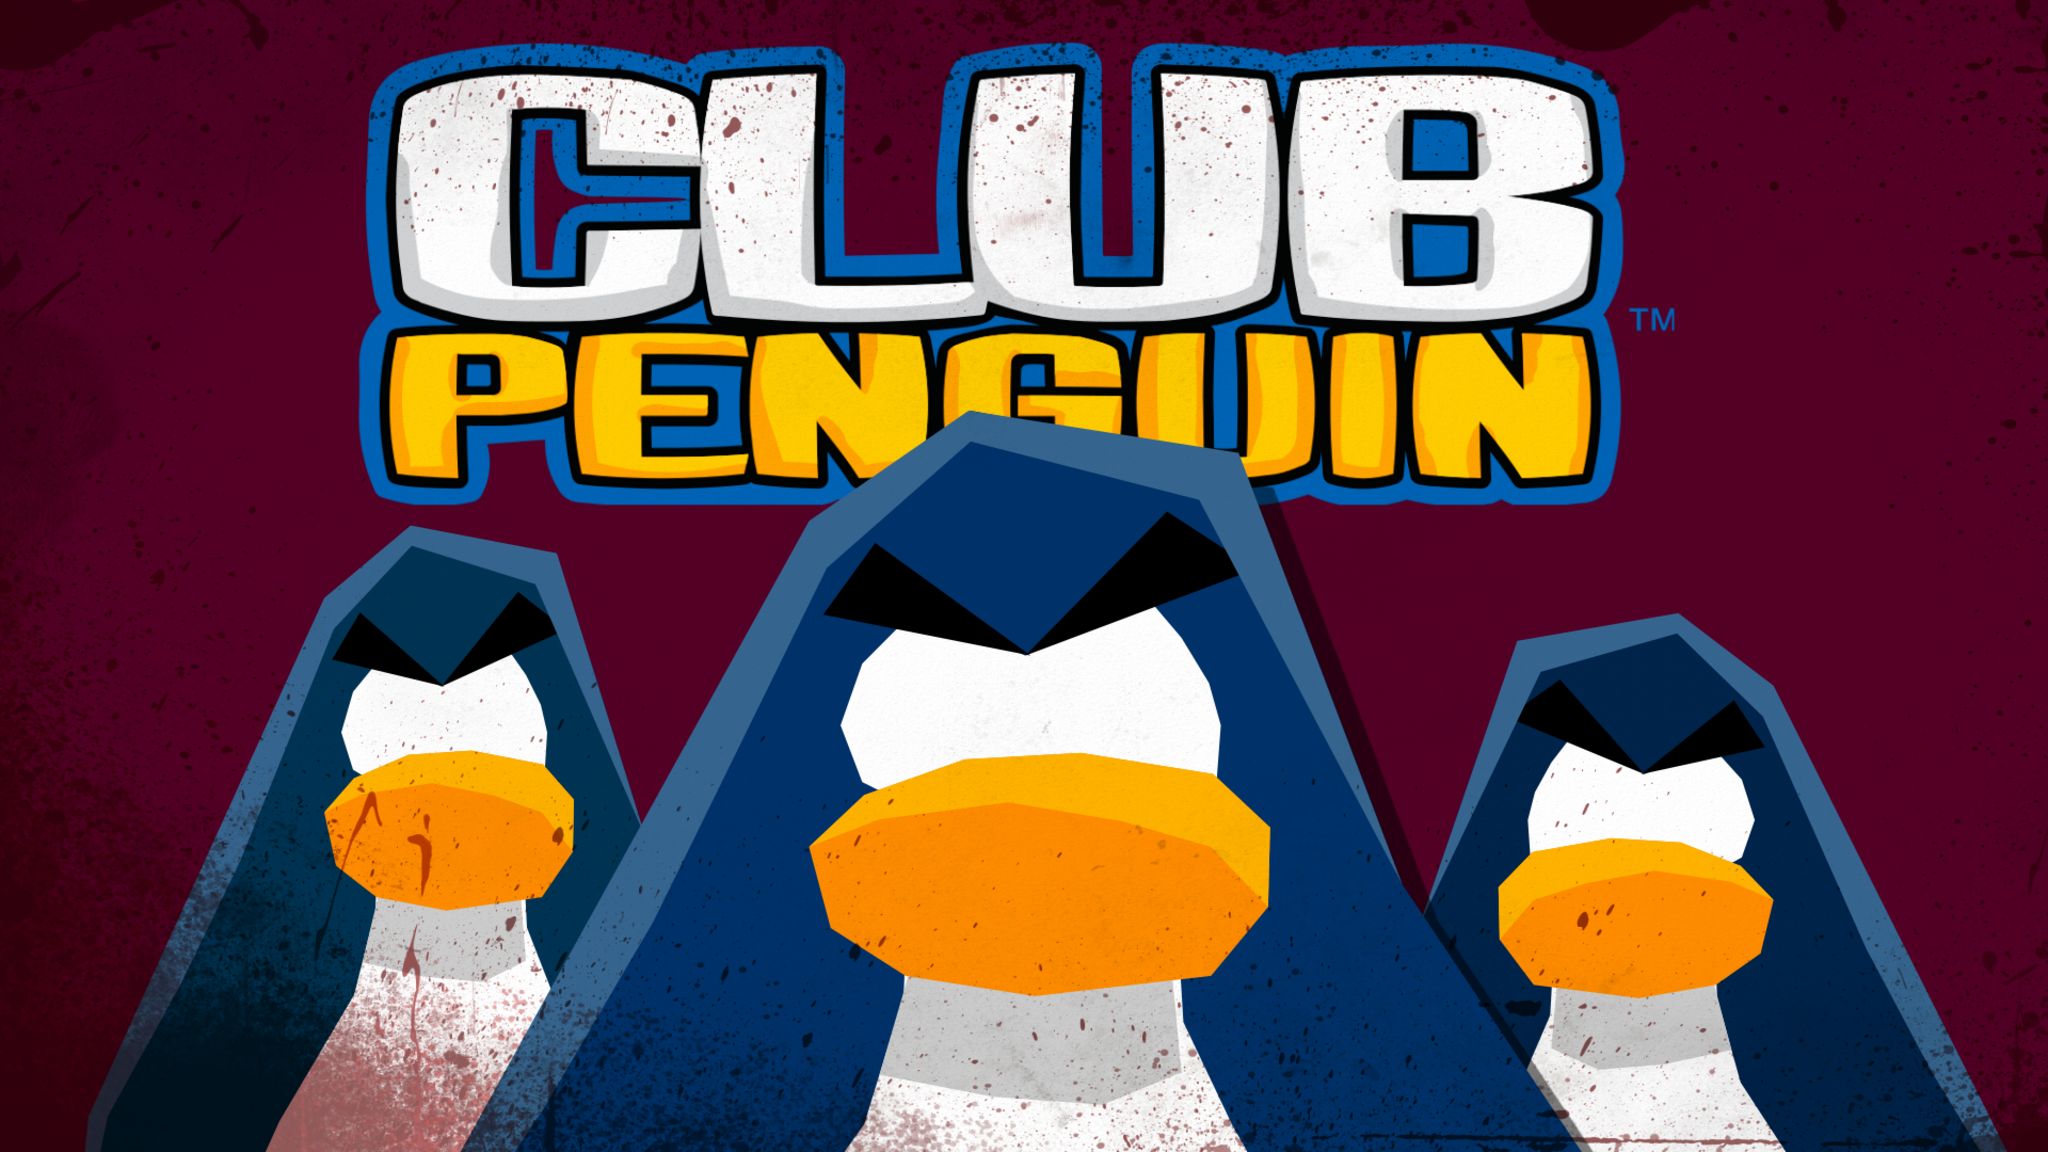 Sinister penguin silhouettes